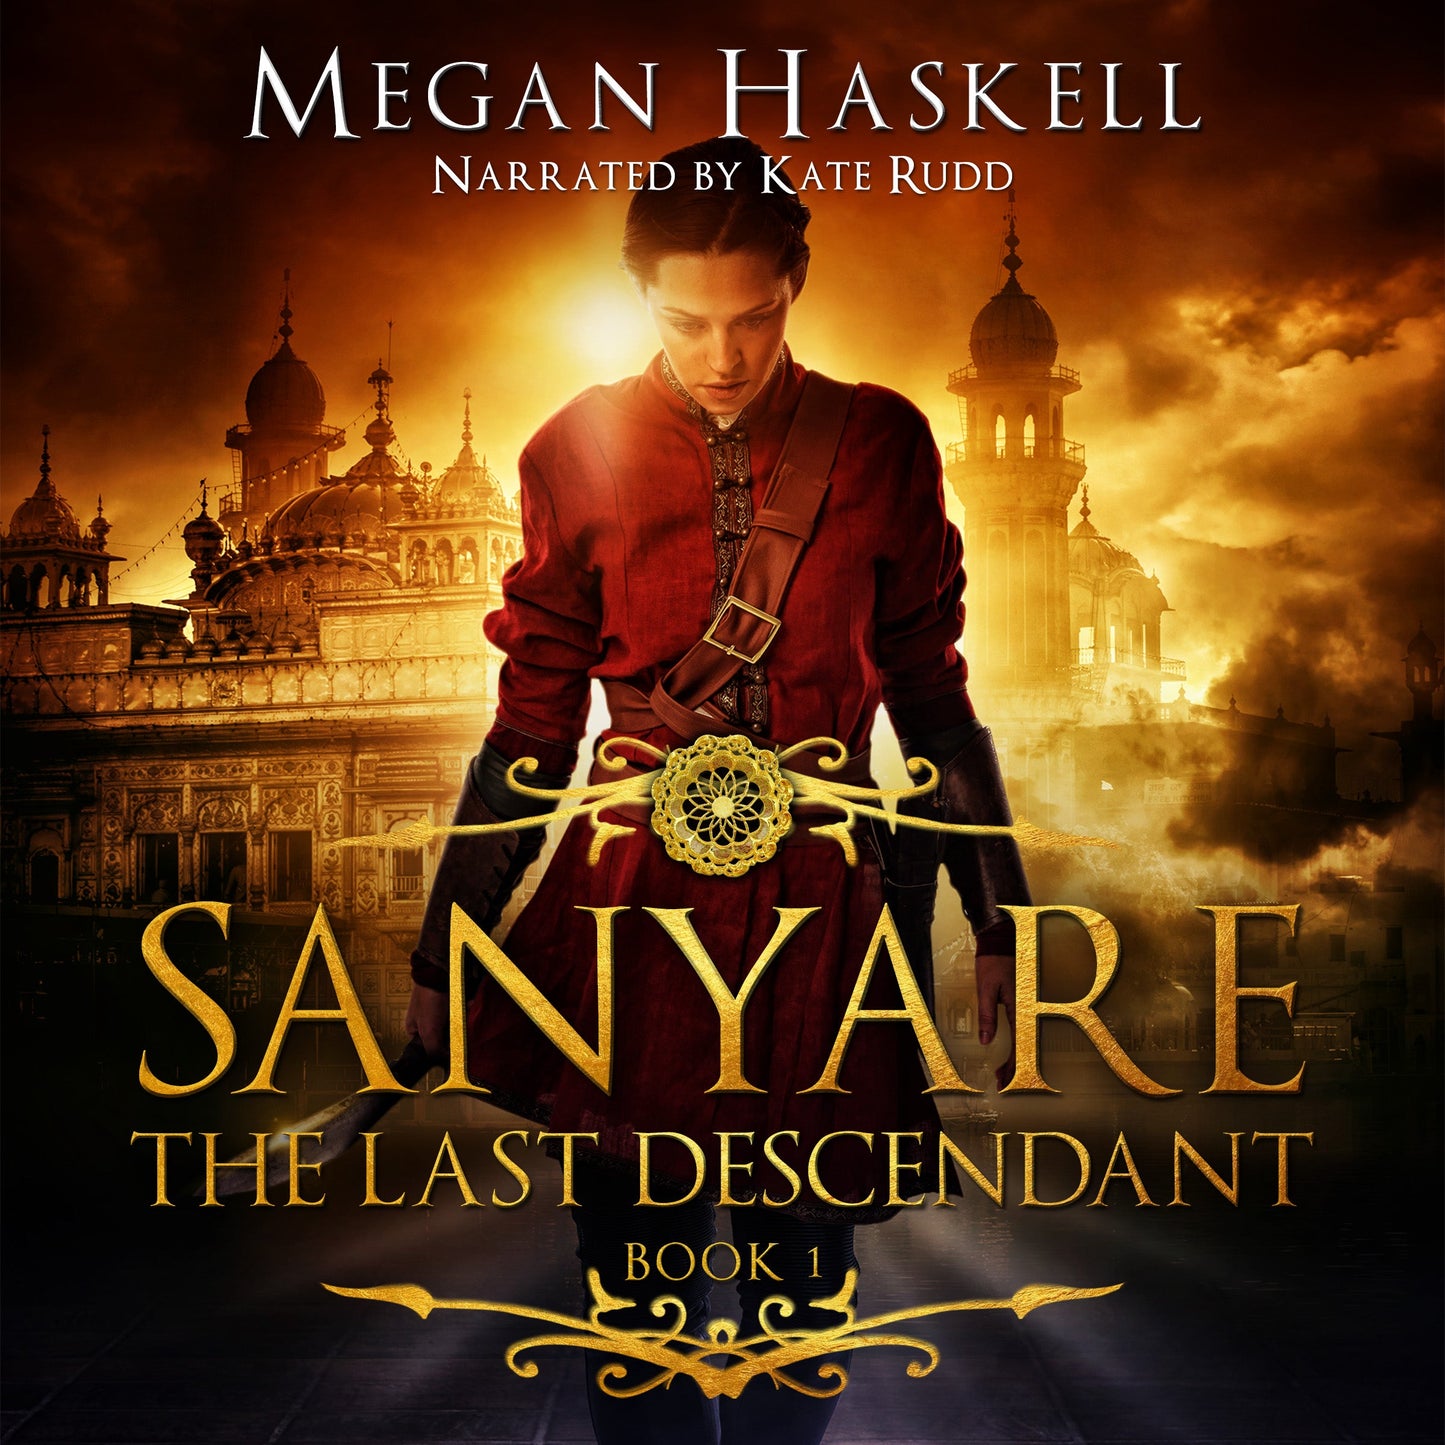 Sanyare: The Last Descendant (Book 1) - All Format Bundle